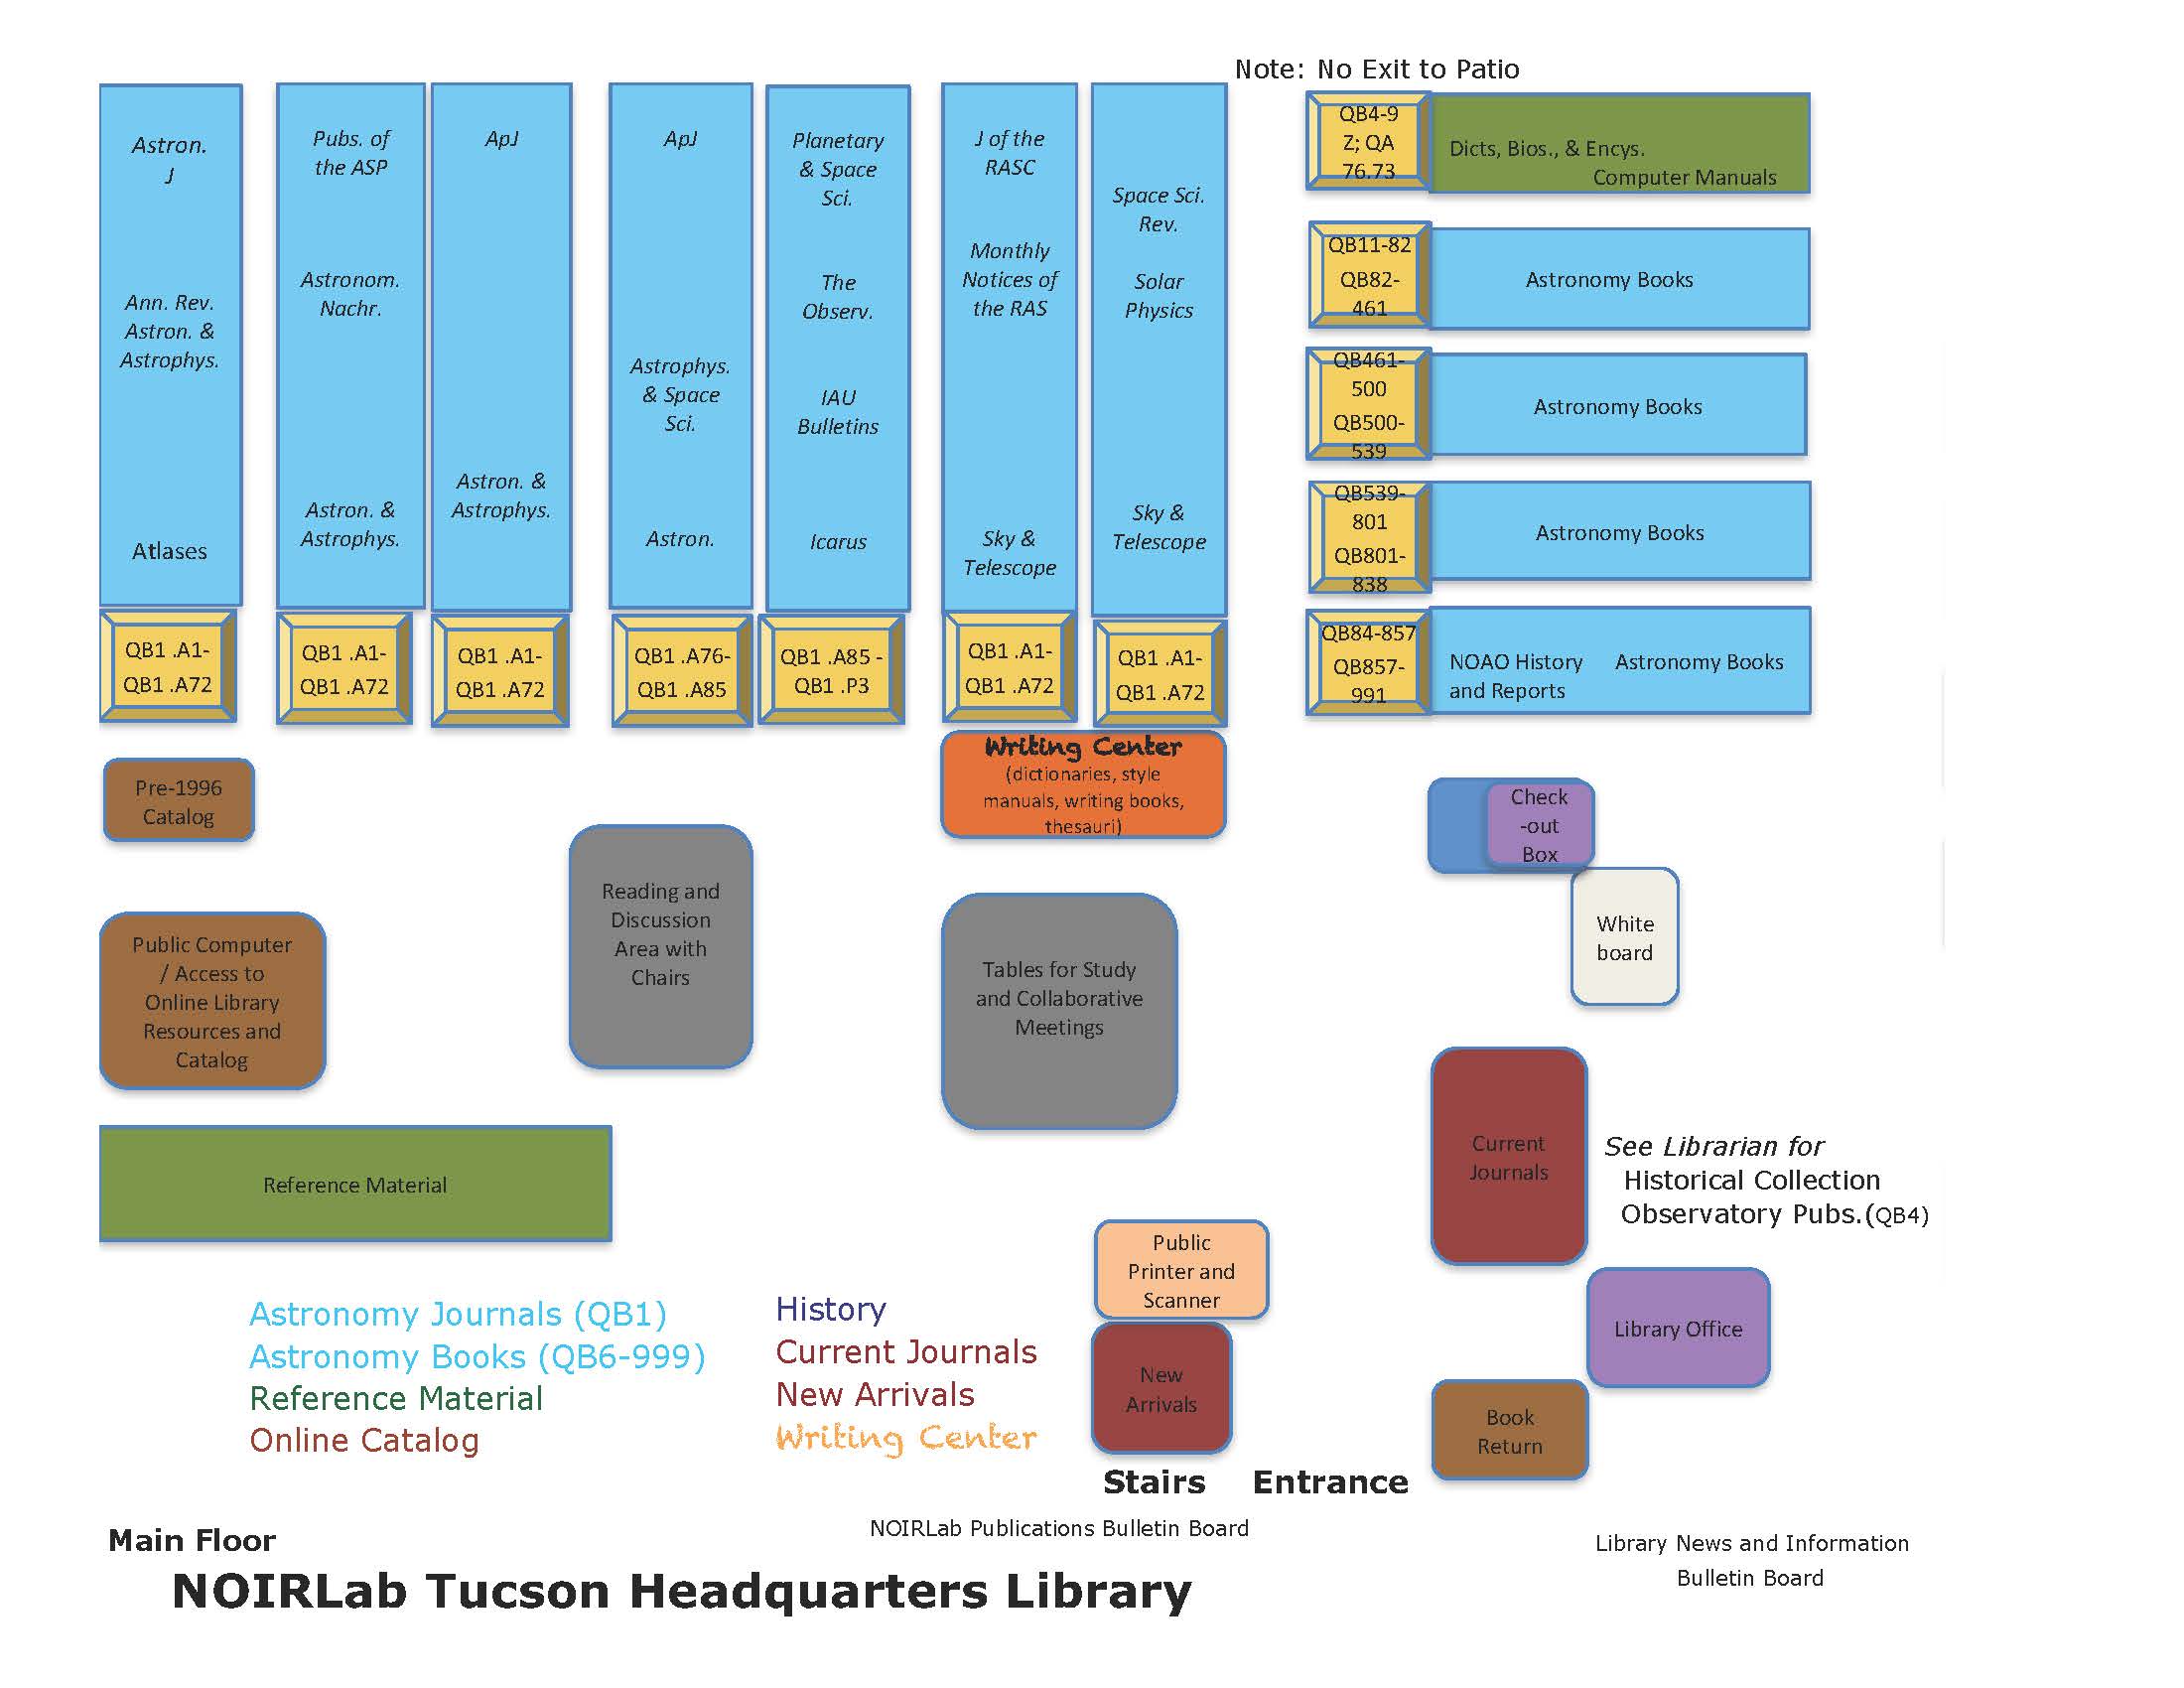 Tucson Headquarters Library Map - Main Floor